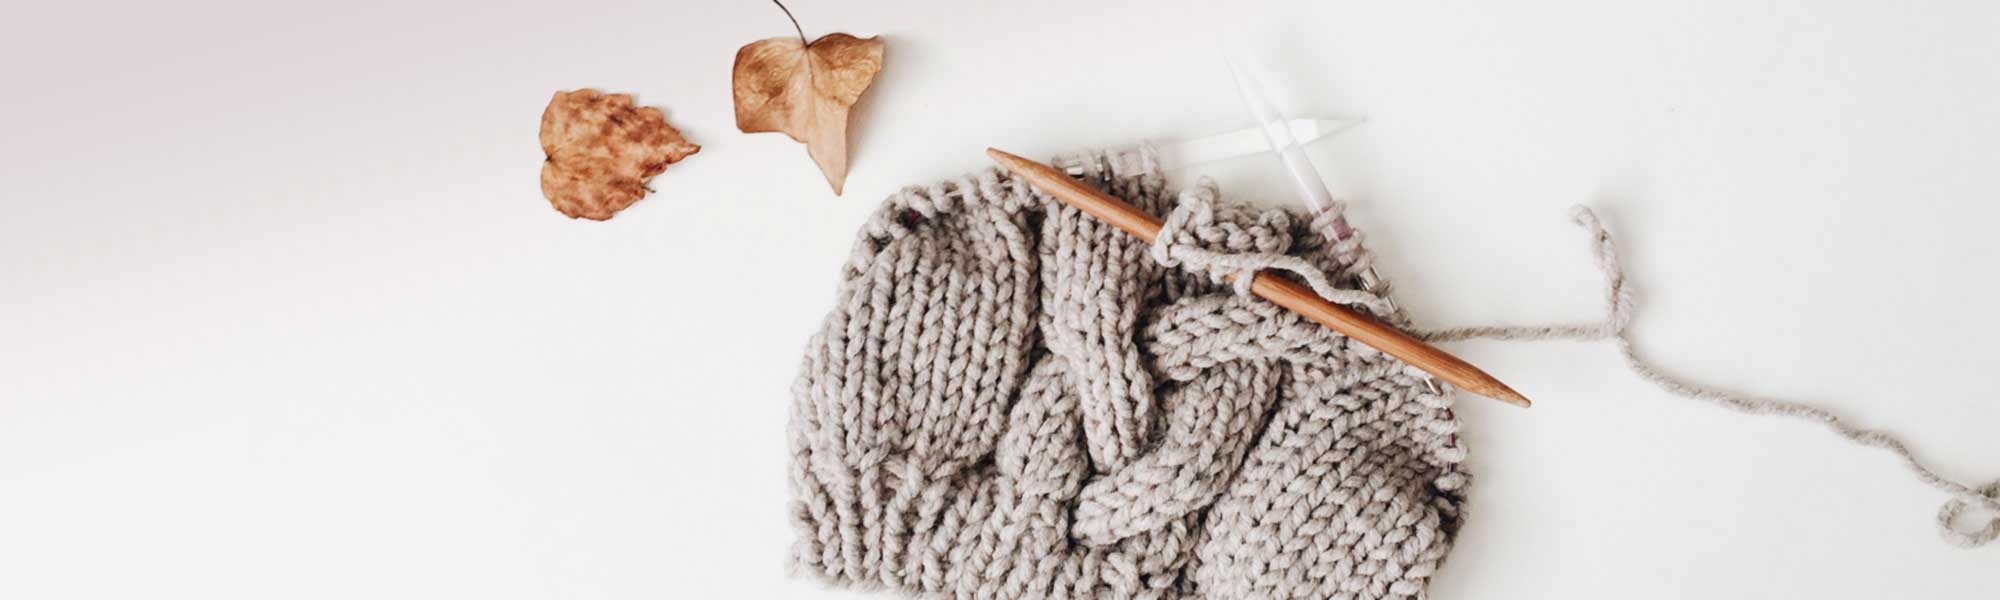 How to Choose Between DPNs and Circular Knitting Needles